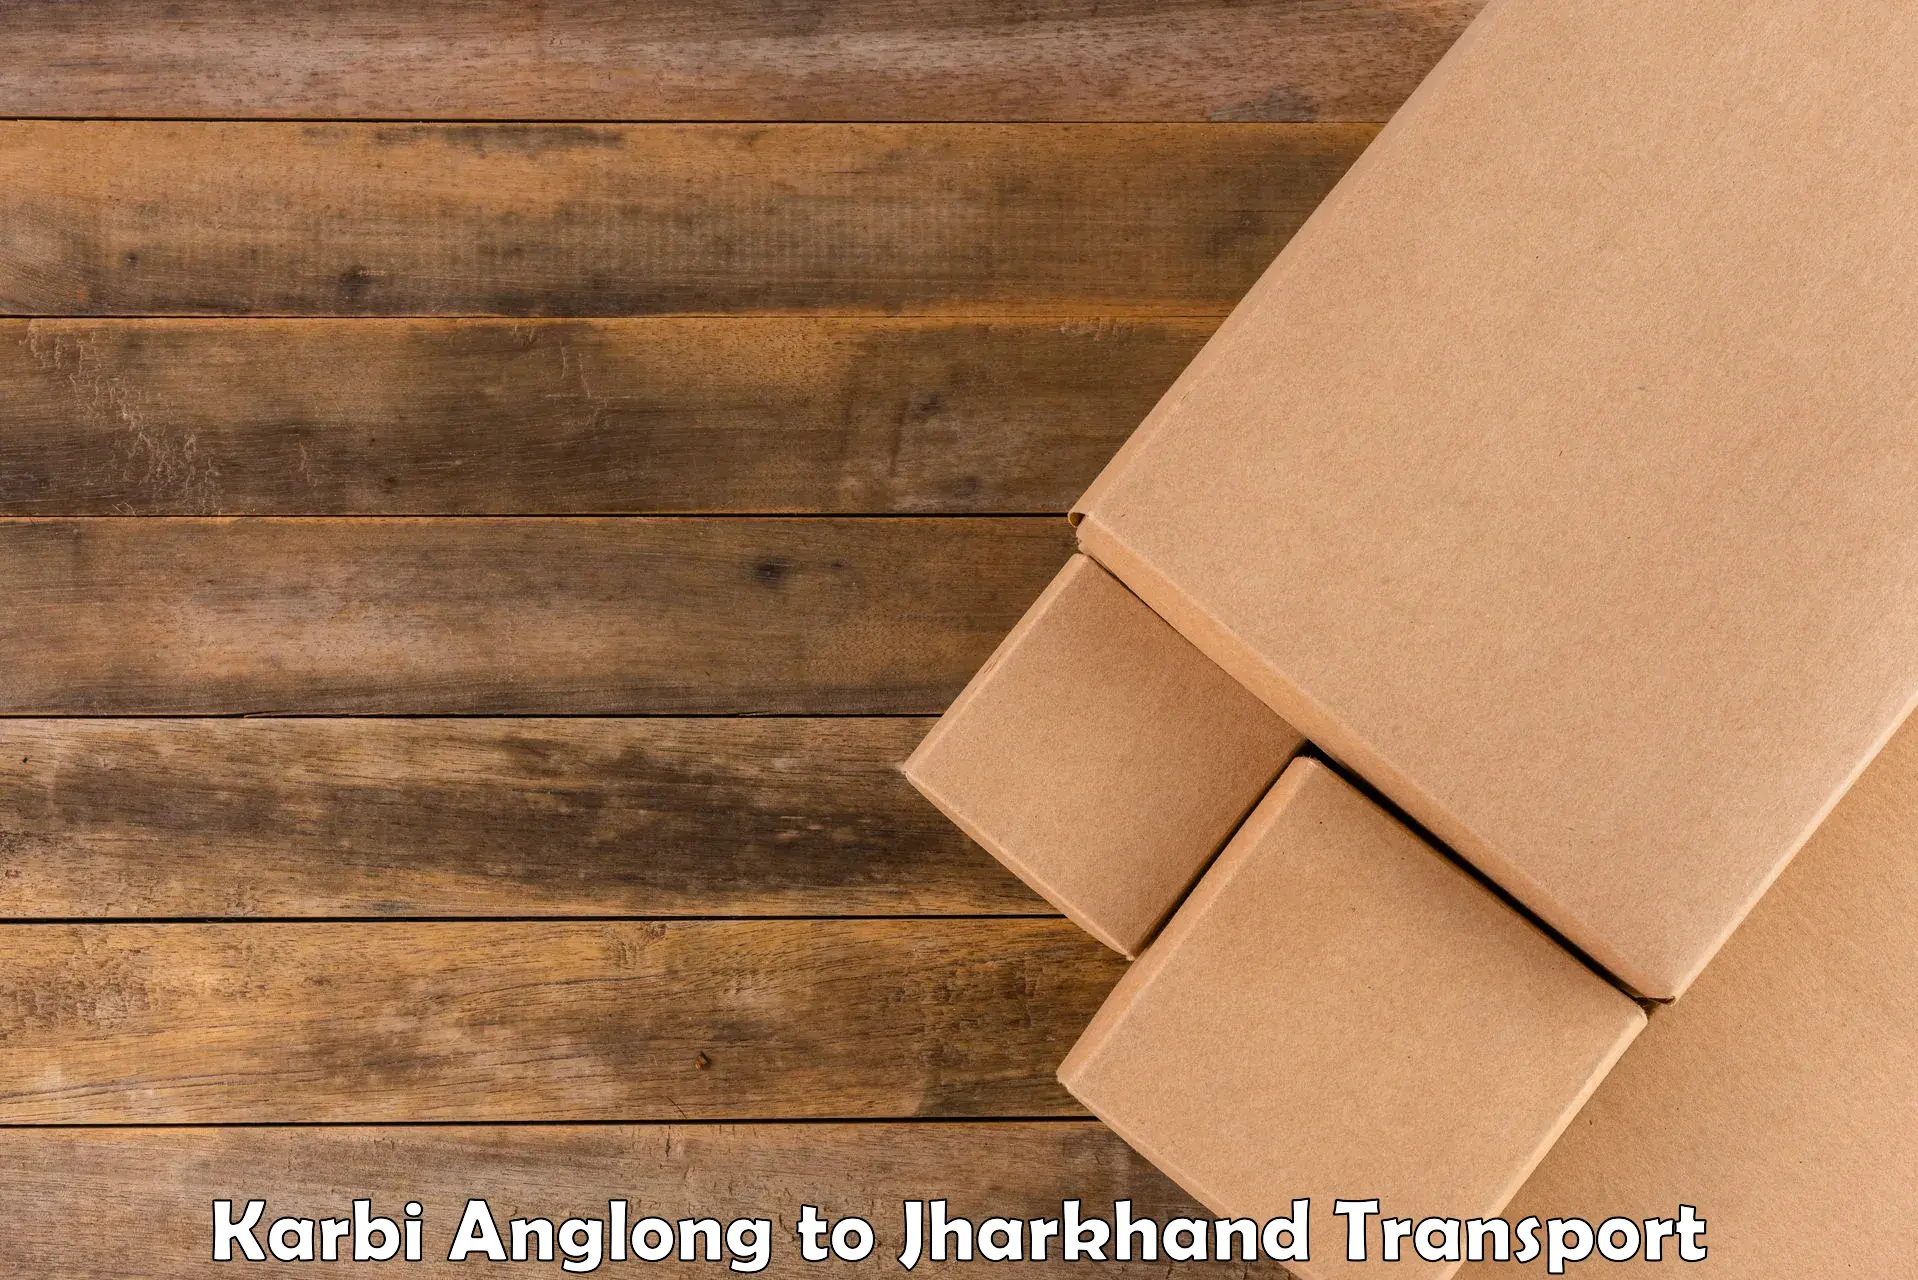 Shipping partner Karbi Anglong to Chandil